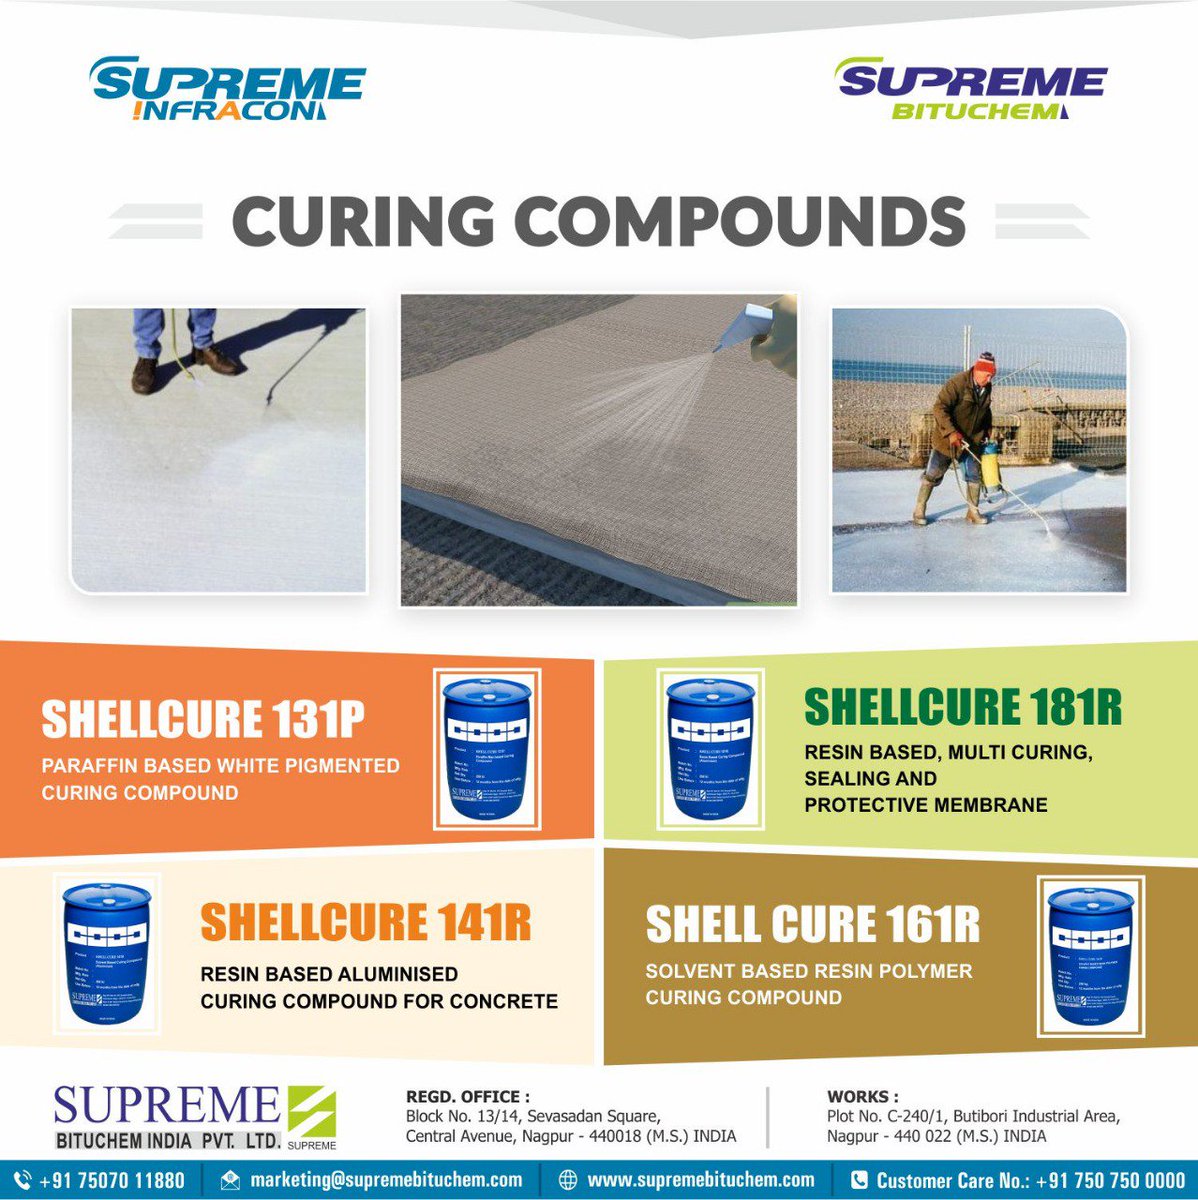 SHELLCURE -CURING COMPOUND
SHELLCURE131P(PC1134),
SHELLCURE 181R (PC2151)
SHELLCURE 141R(PC 2176) 
SHELLCURE 161R(PC 2173)
A product of Supreme Bituchem India Pvt Ltd. For details visit supremebituchem.com call 07507500000 @India @Maharashtra #roads #concrete #curingcompound